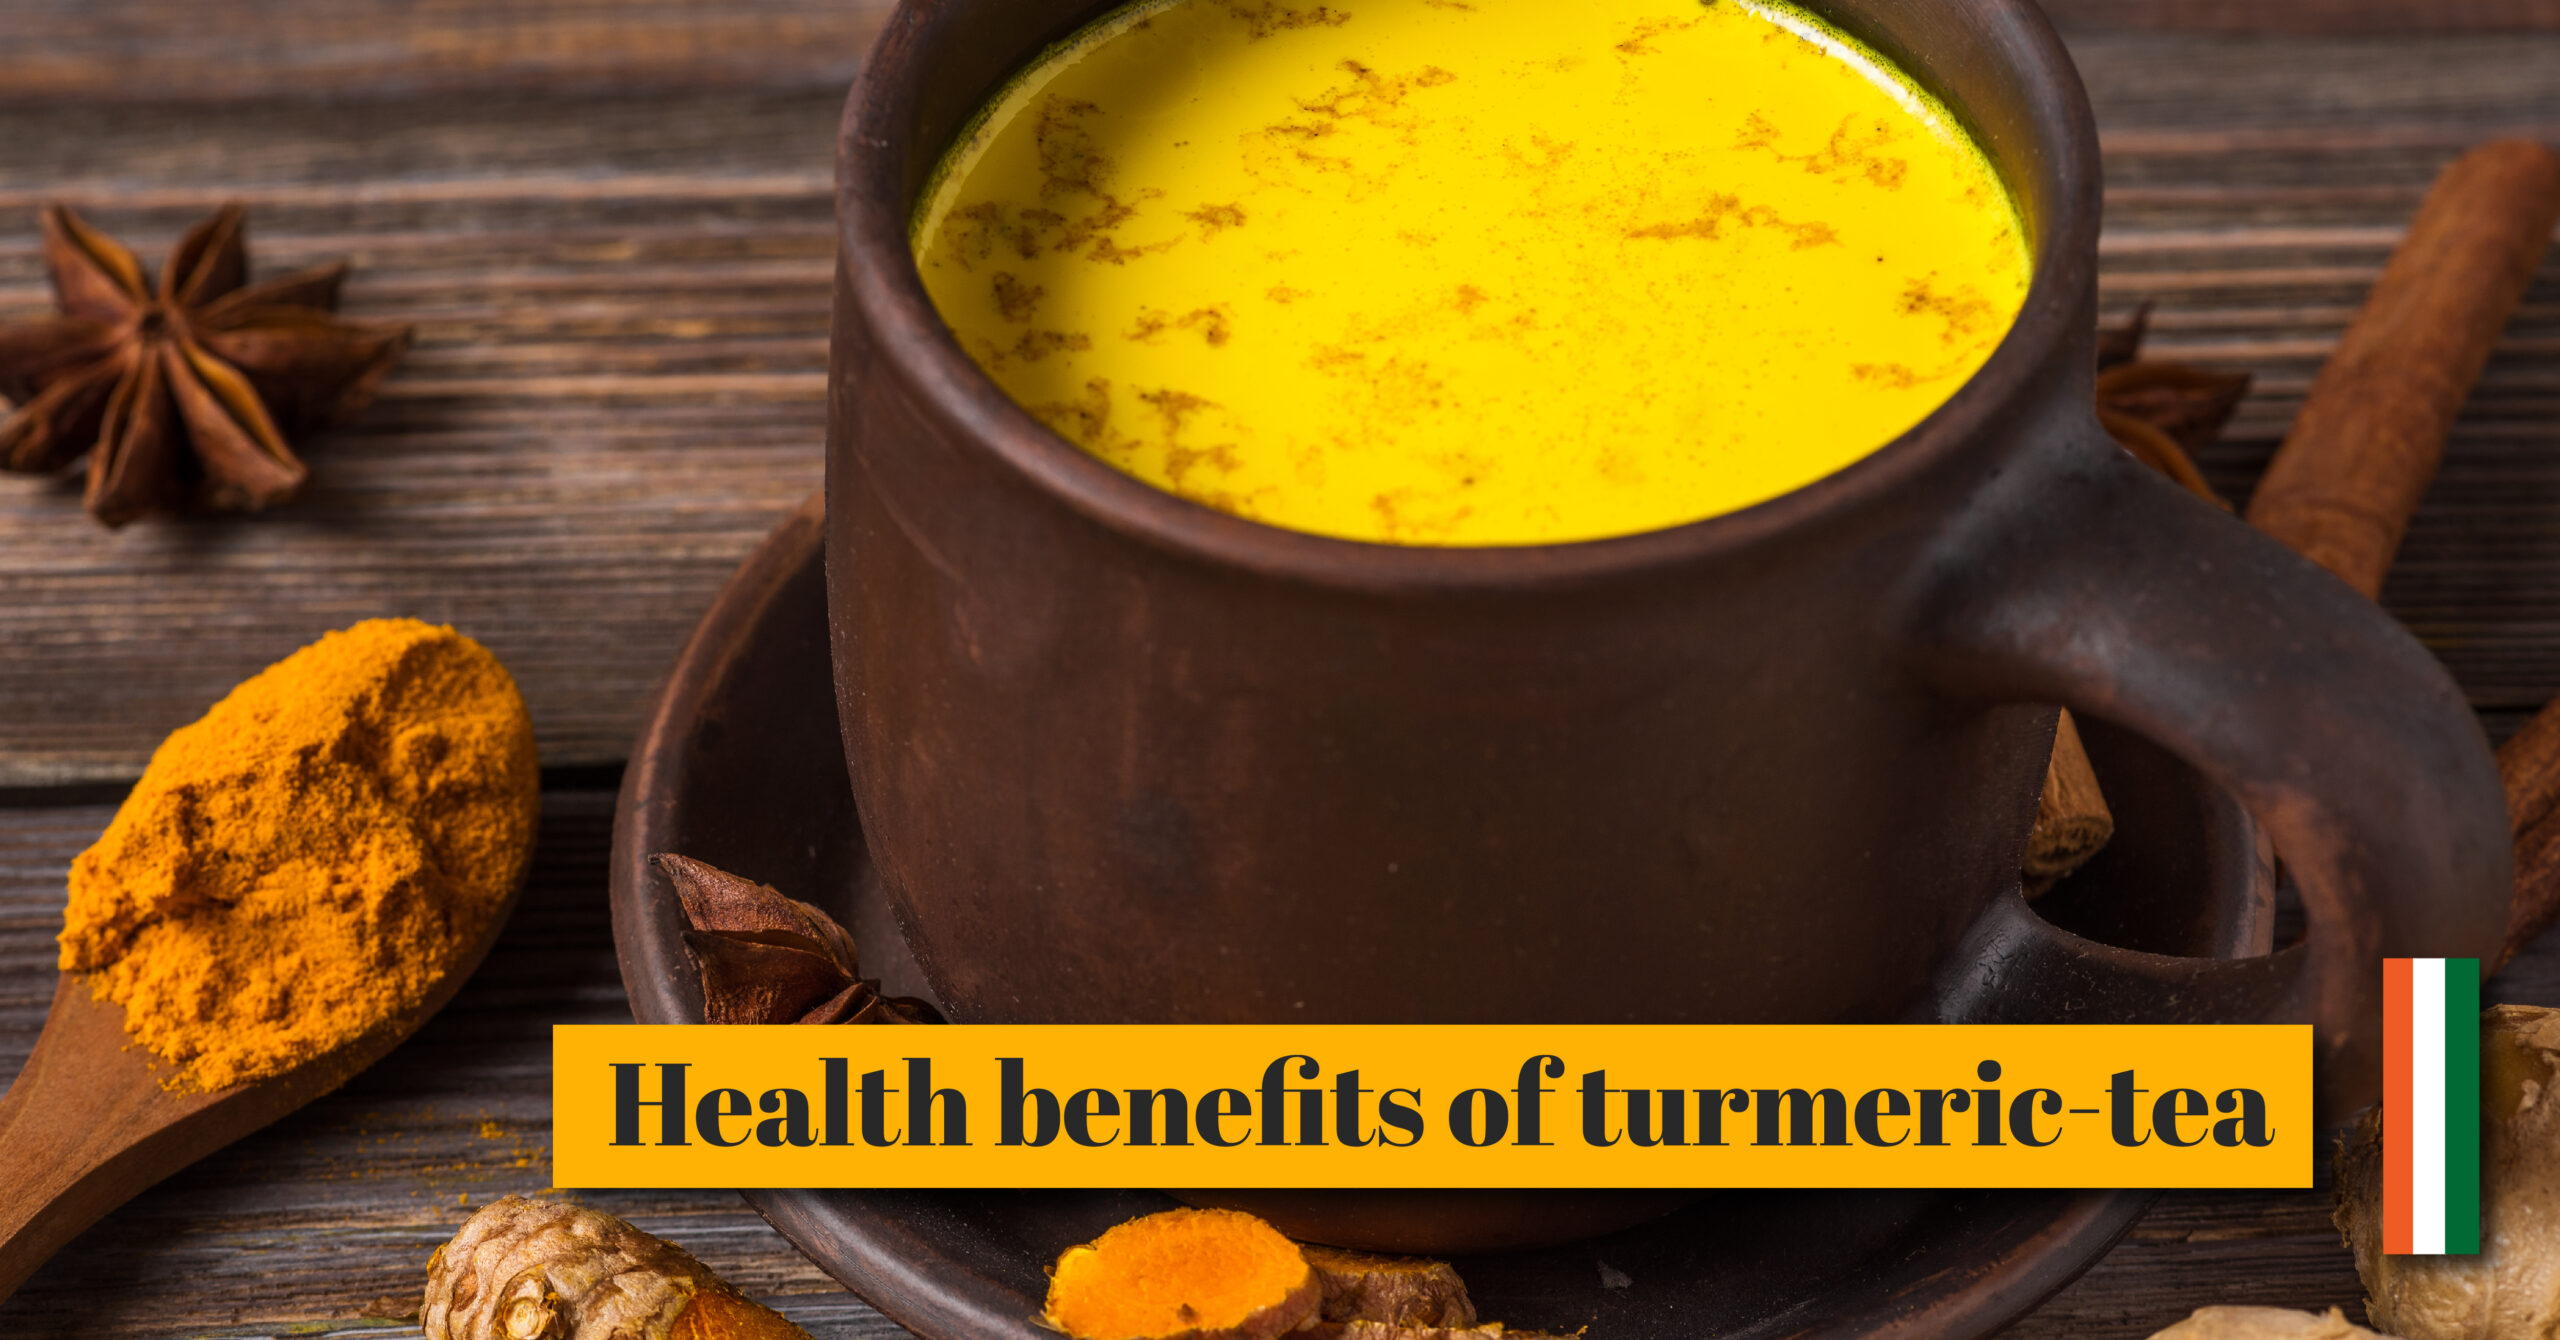 Health benefits of turmeric-tea